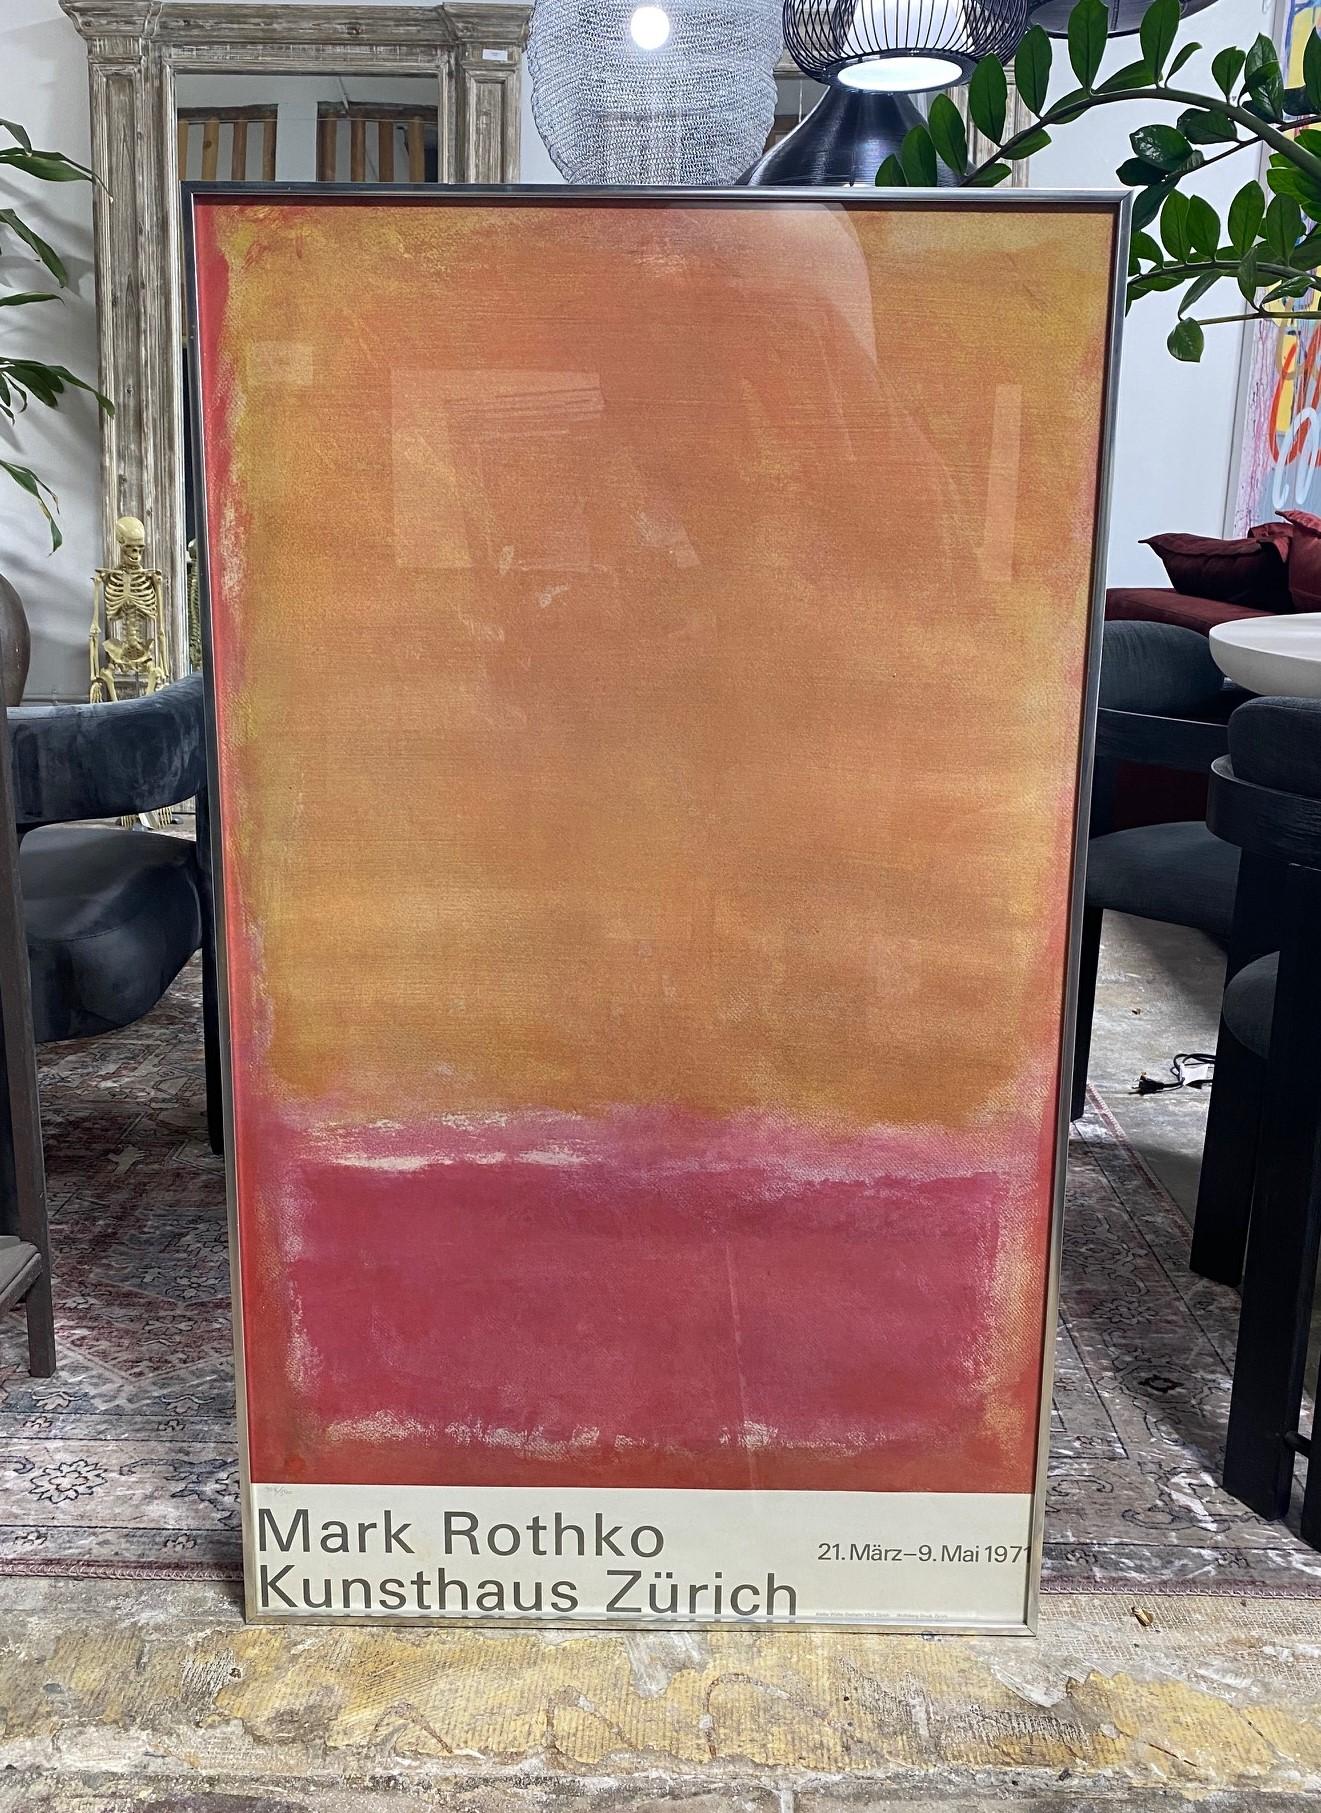 A wonderful original vintage famed American artist Mark Rothko offset lithograph Switzerland exhibition poster 